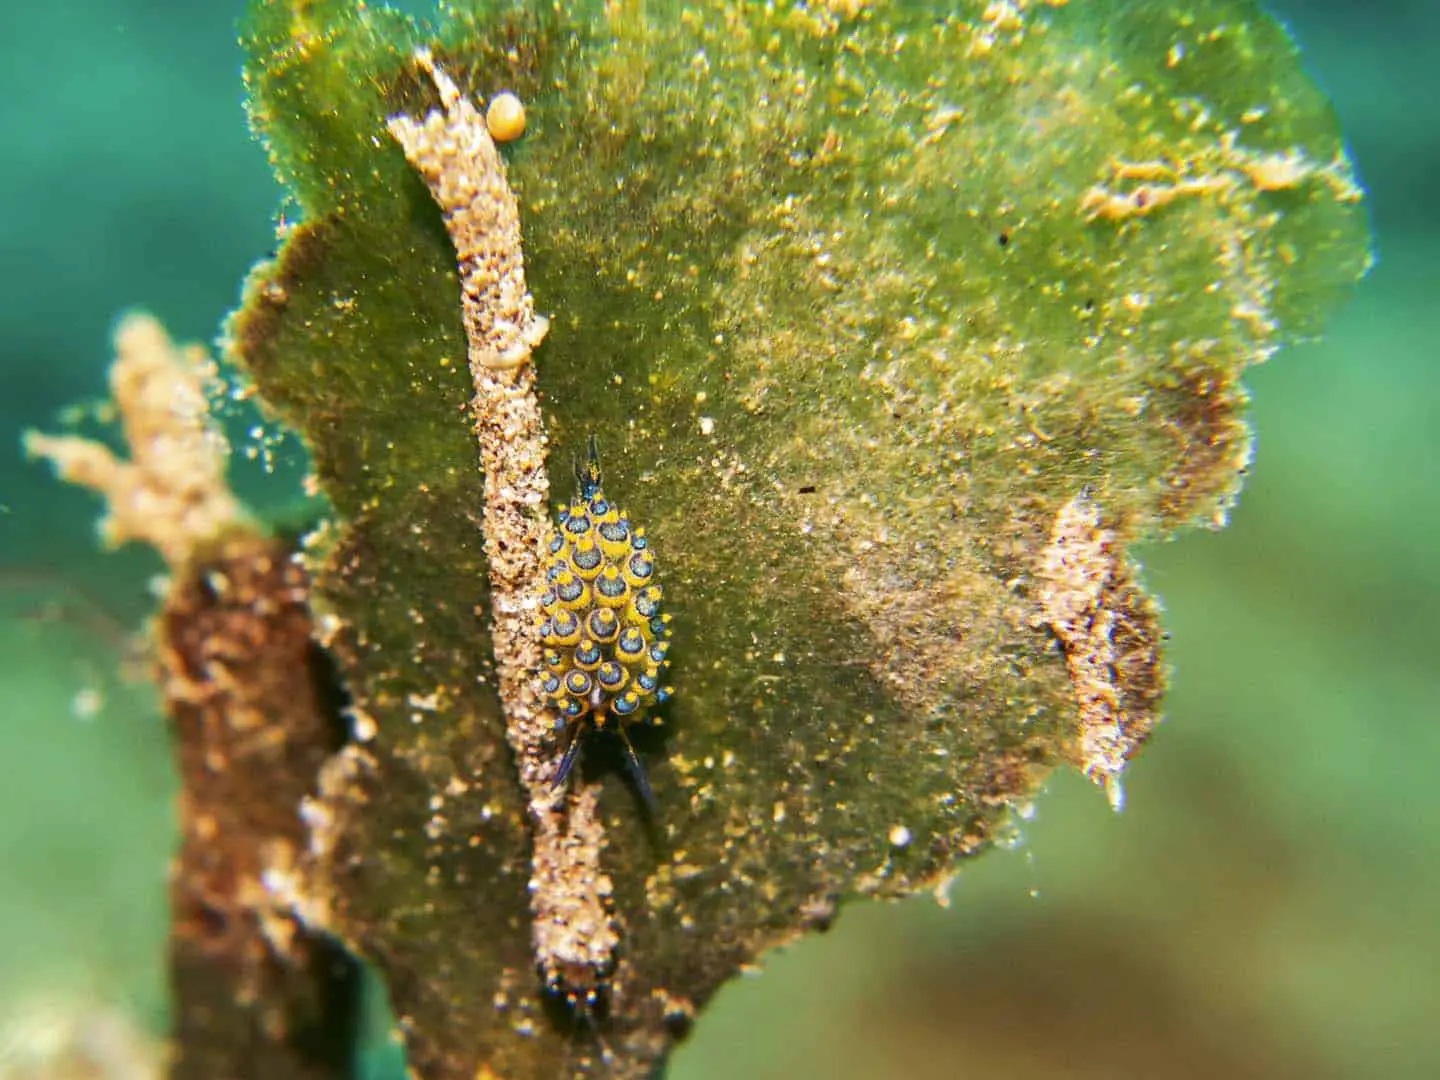 Sap-sucking sea slug- Costasiella sp. spotted while scuba diving in Dauin